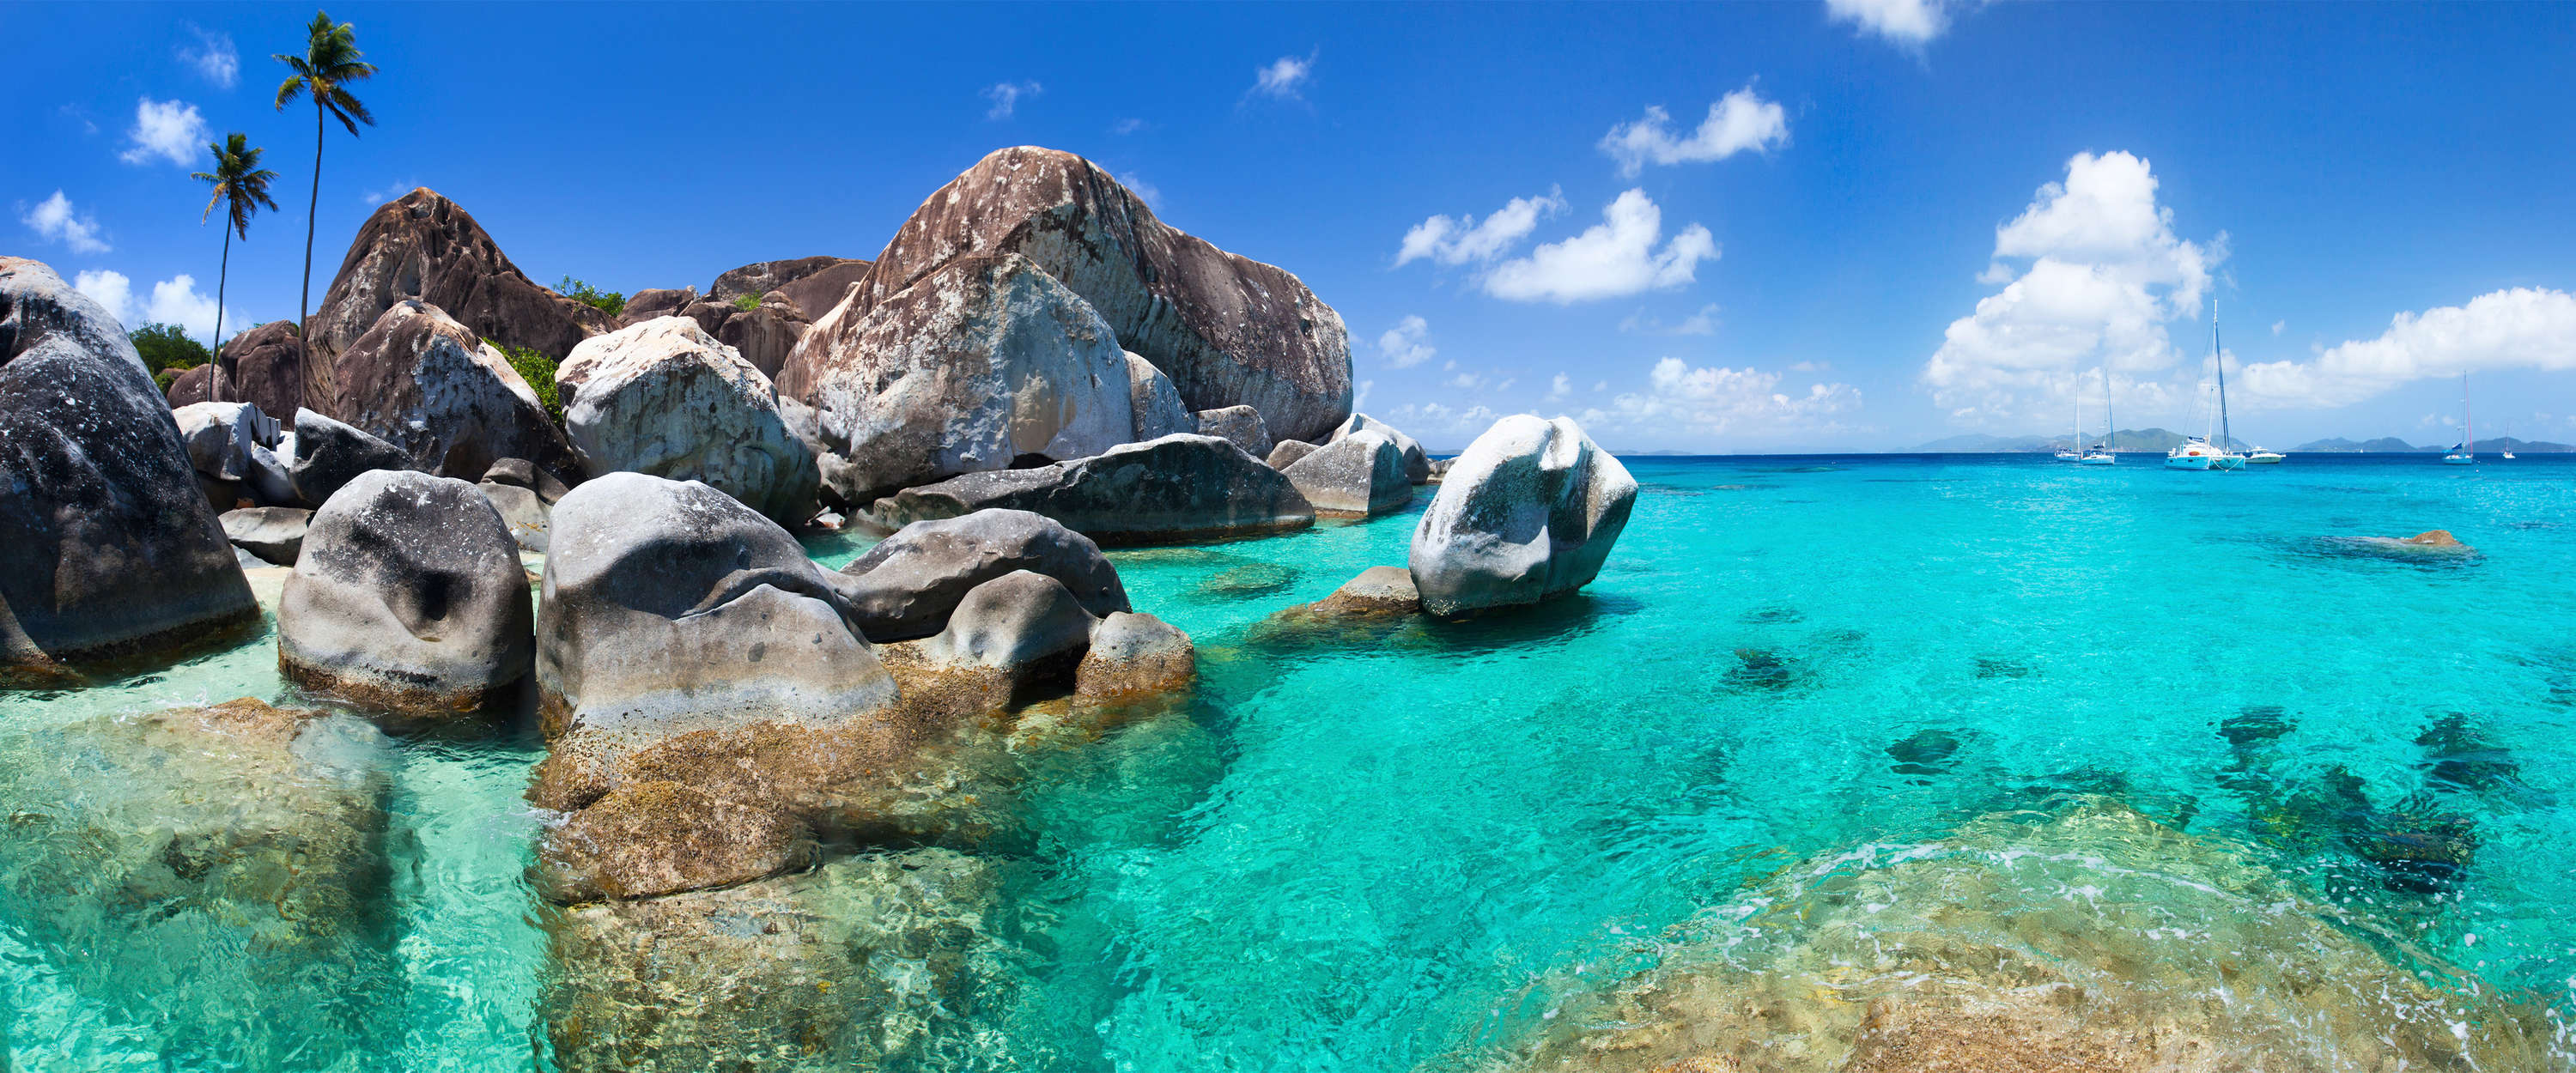             Fototapete Seychellen türkises Wasser, Felsen & Palmen
        